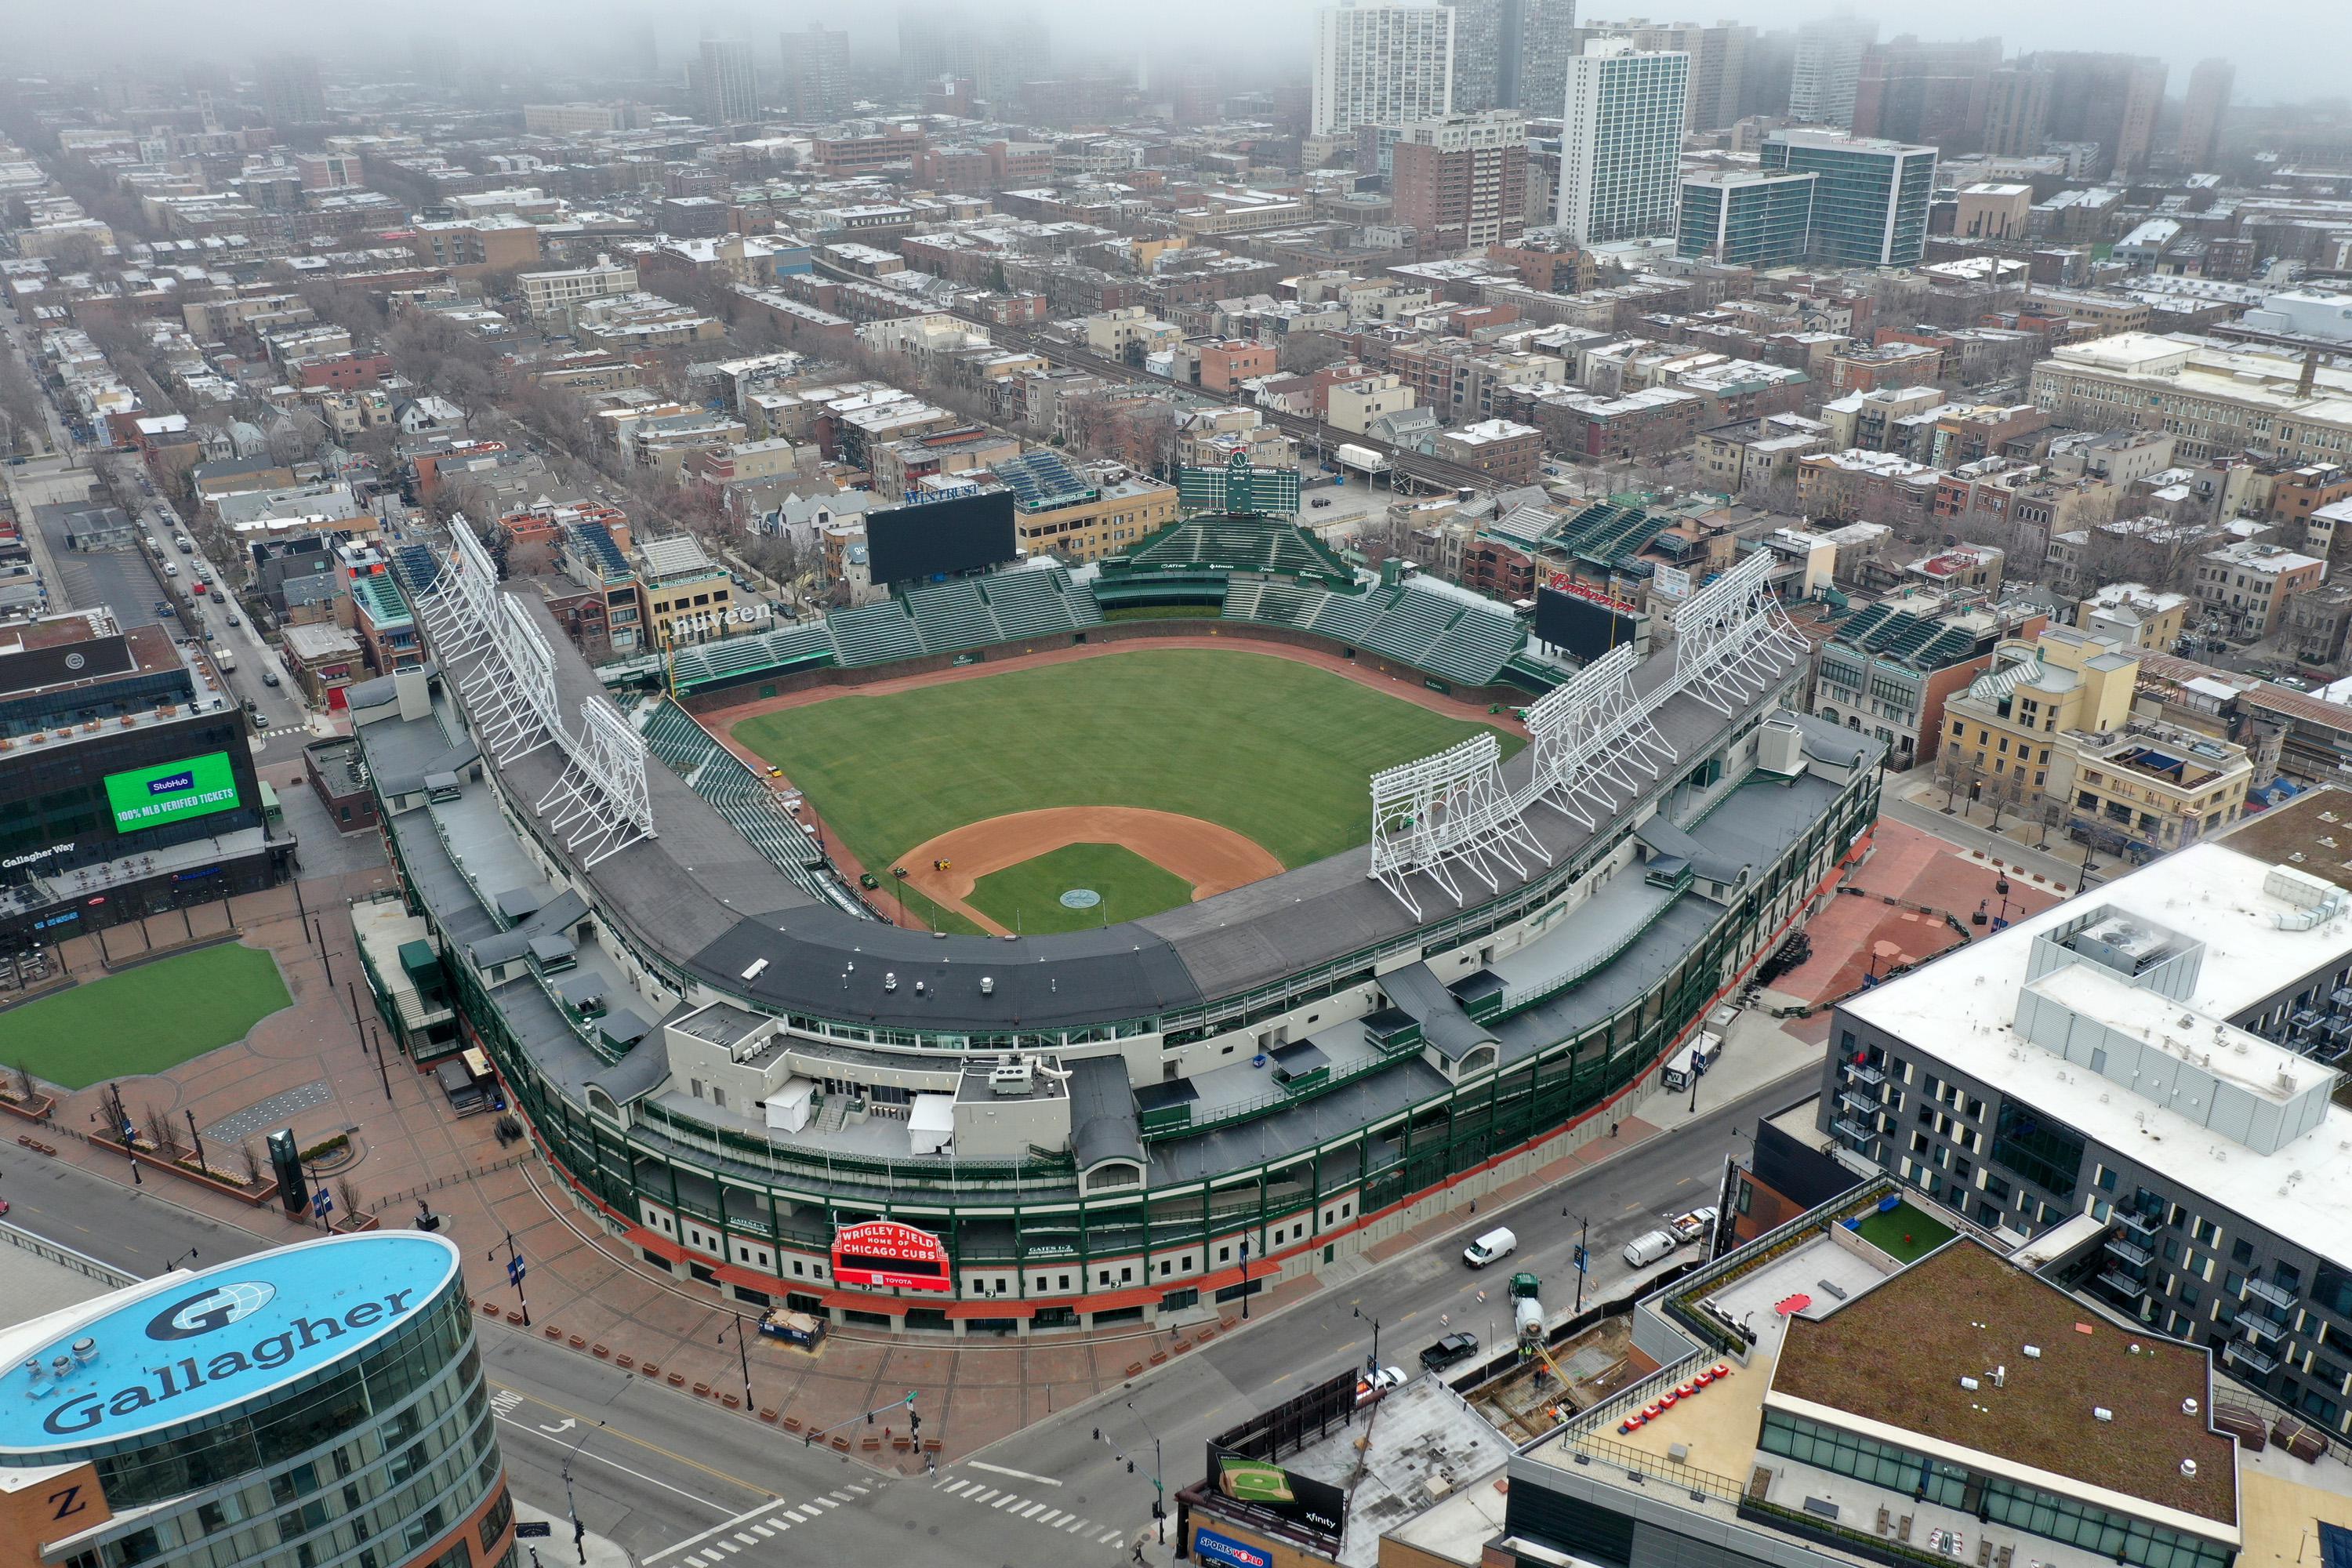 An aerial view of an empty baseball stadium